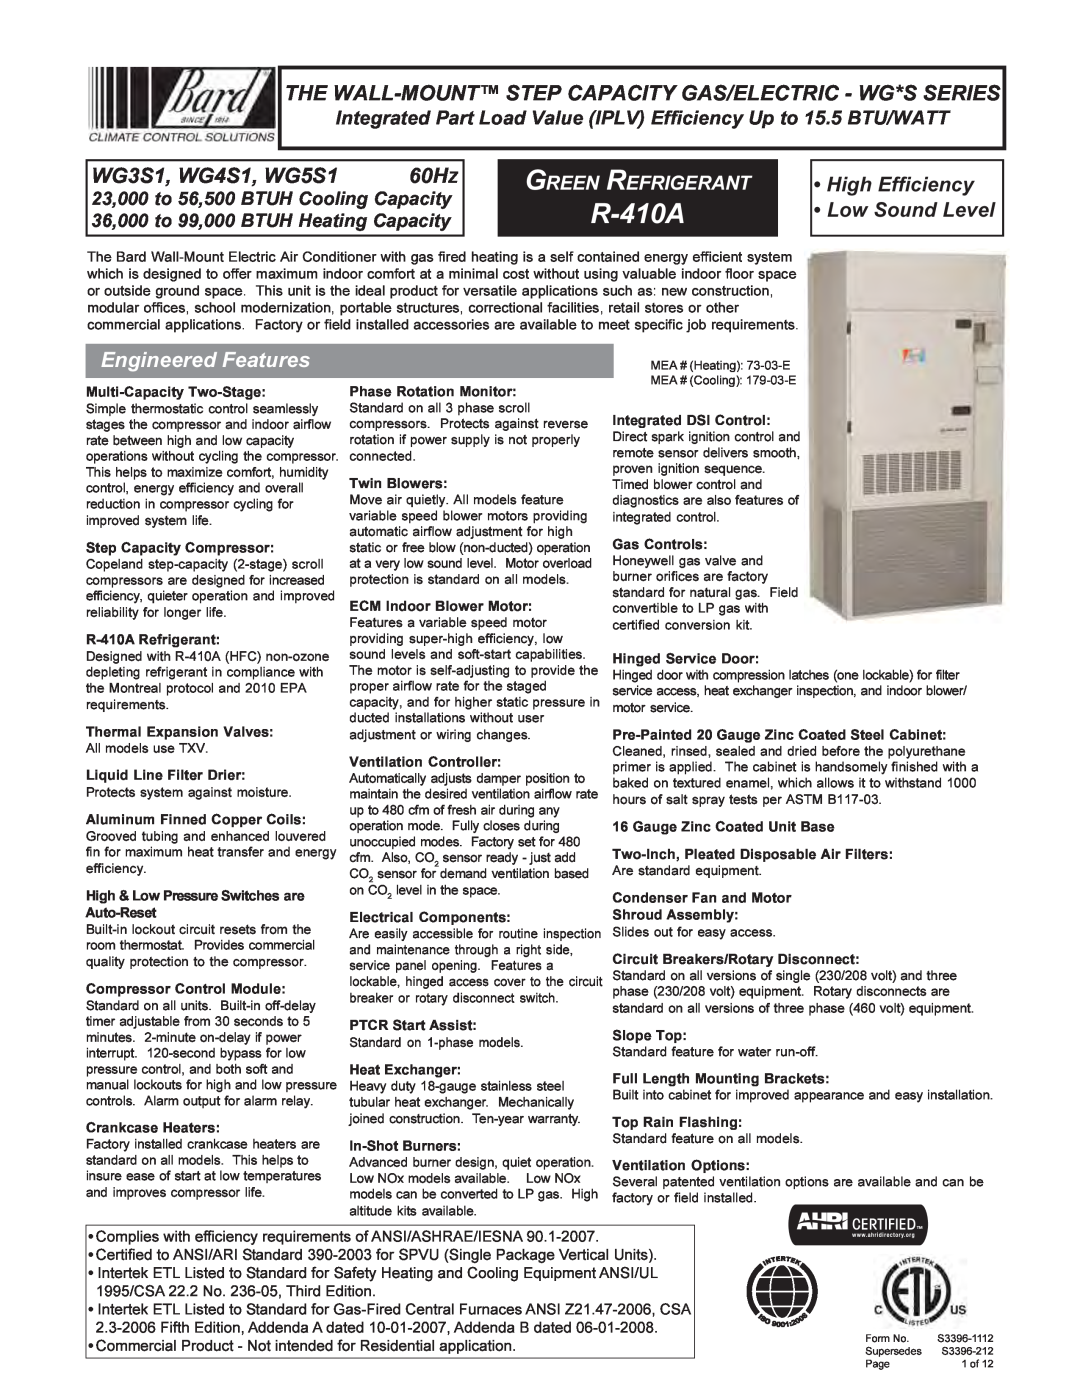 Bard warranty WG3S1, WG4S1, WG5S1, 60HZ, R-410A, Green Refrigerant, •High Efficiency •Low Sound Level 